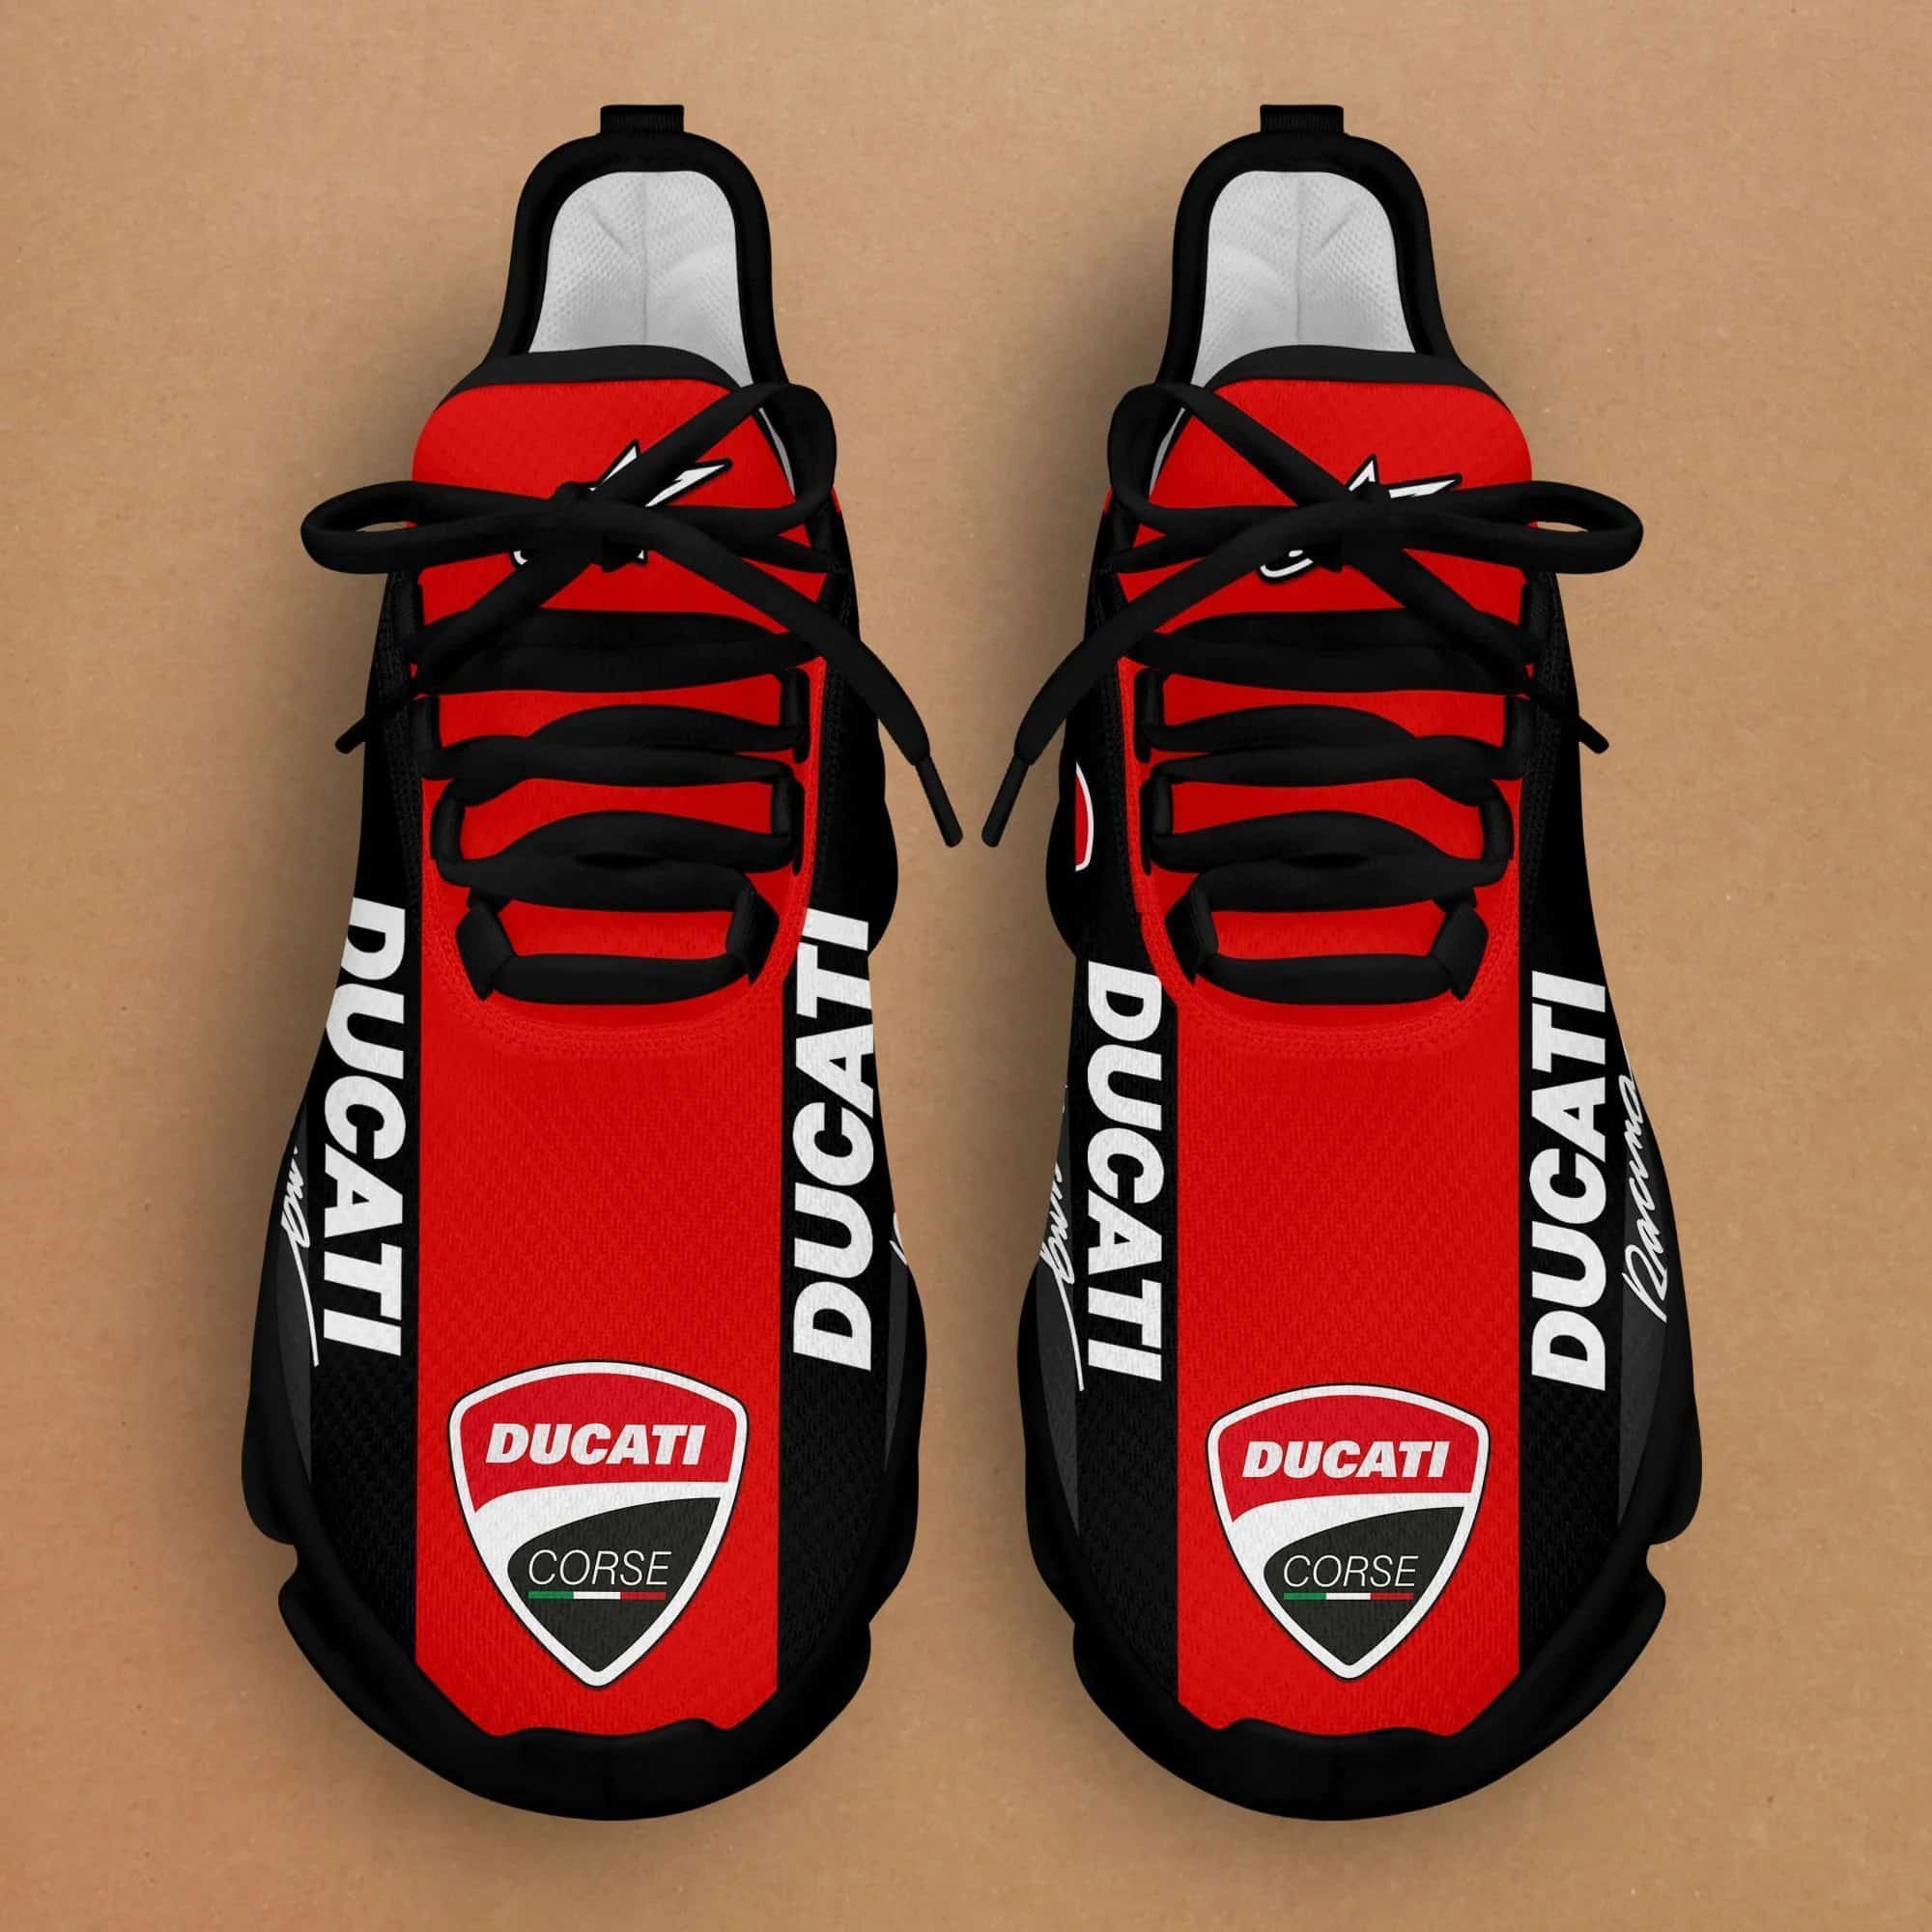 Ducati Racing Running Shoes Max Soul Shoes Sneakers Ver 3 4